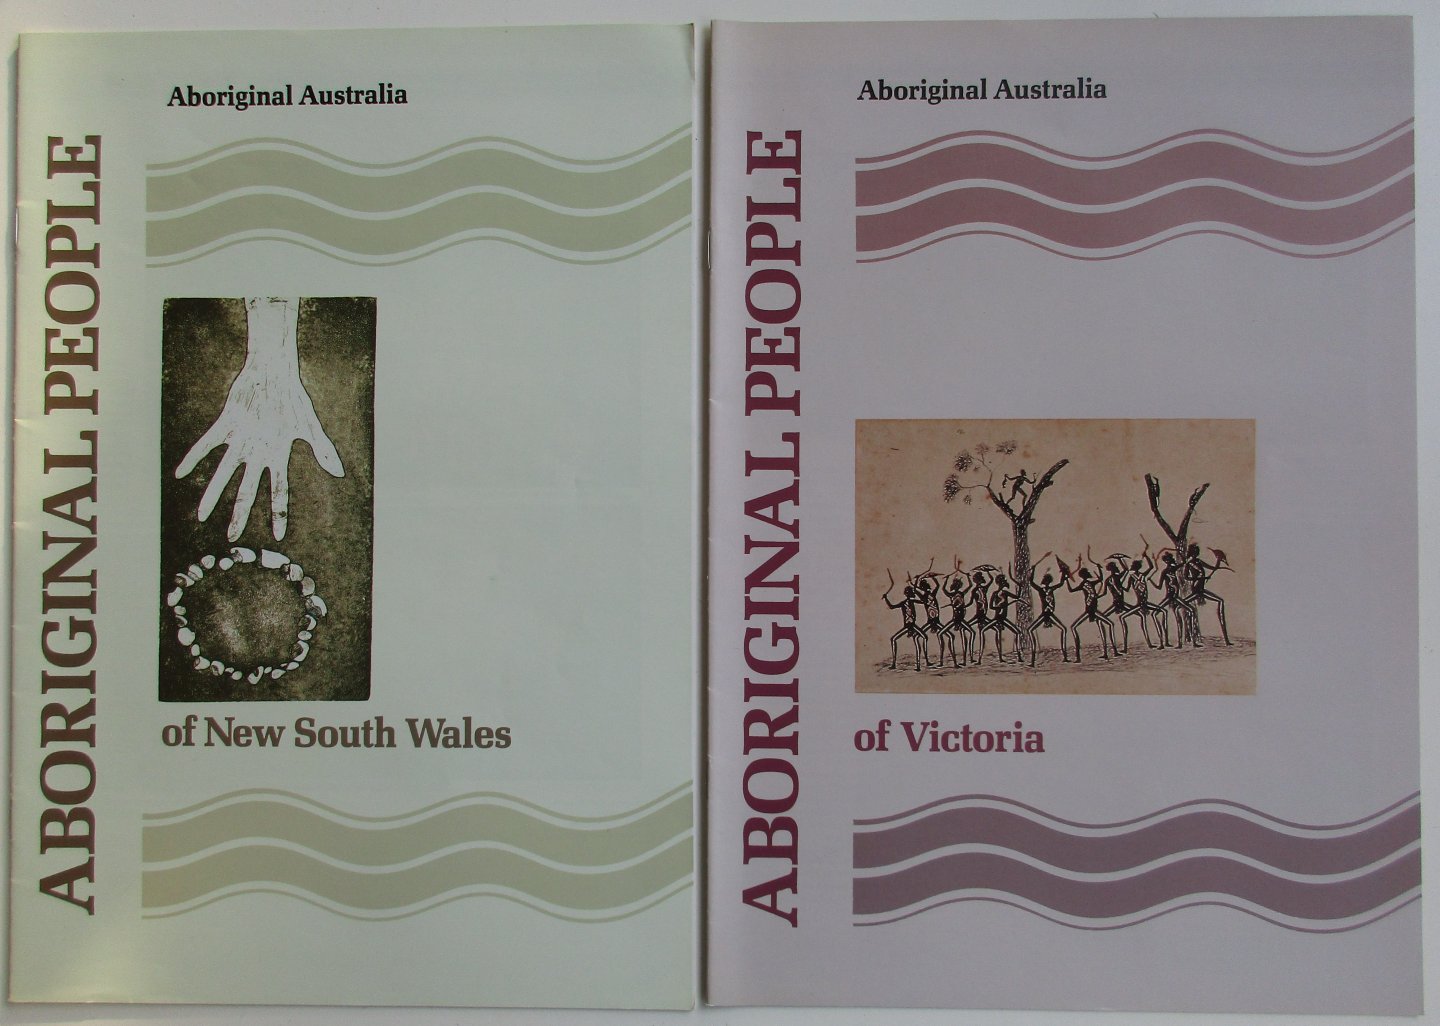 Div. - Indigenous Australia ATSIC